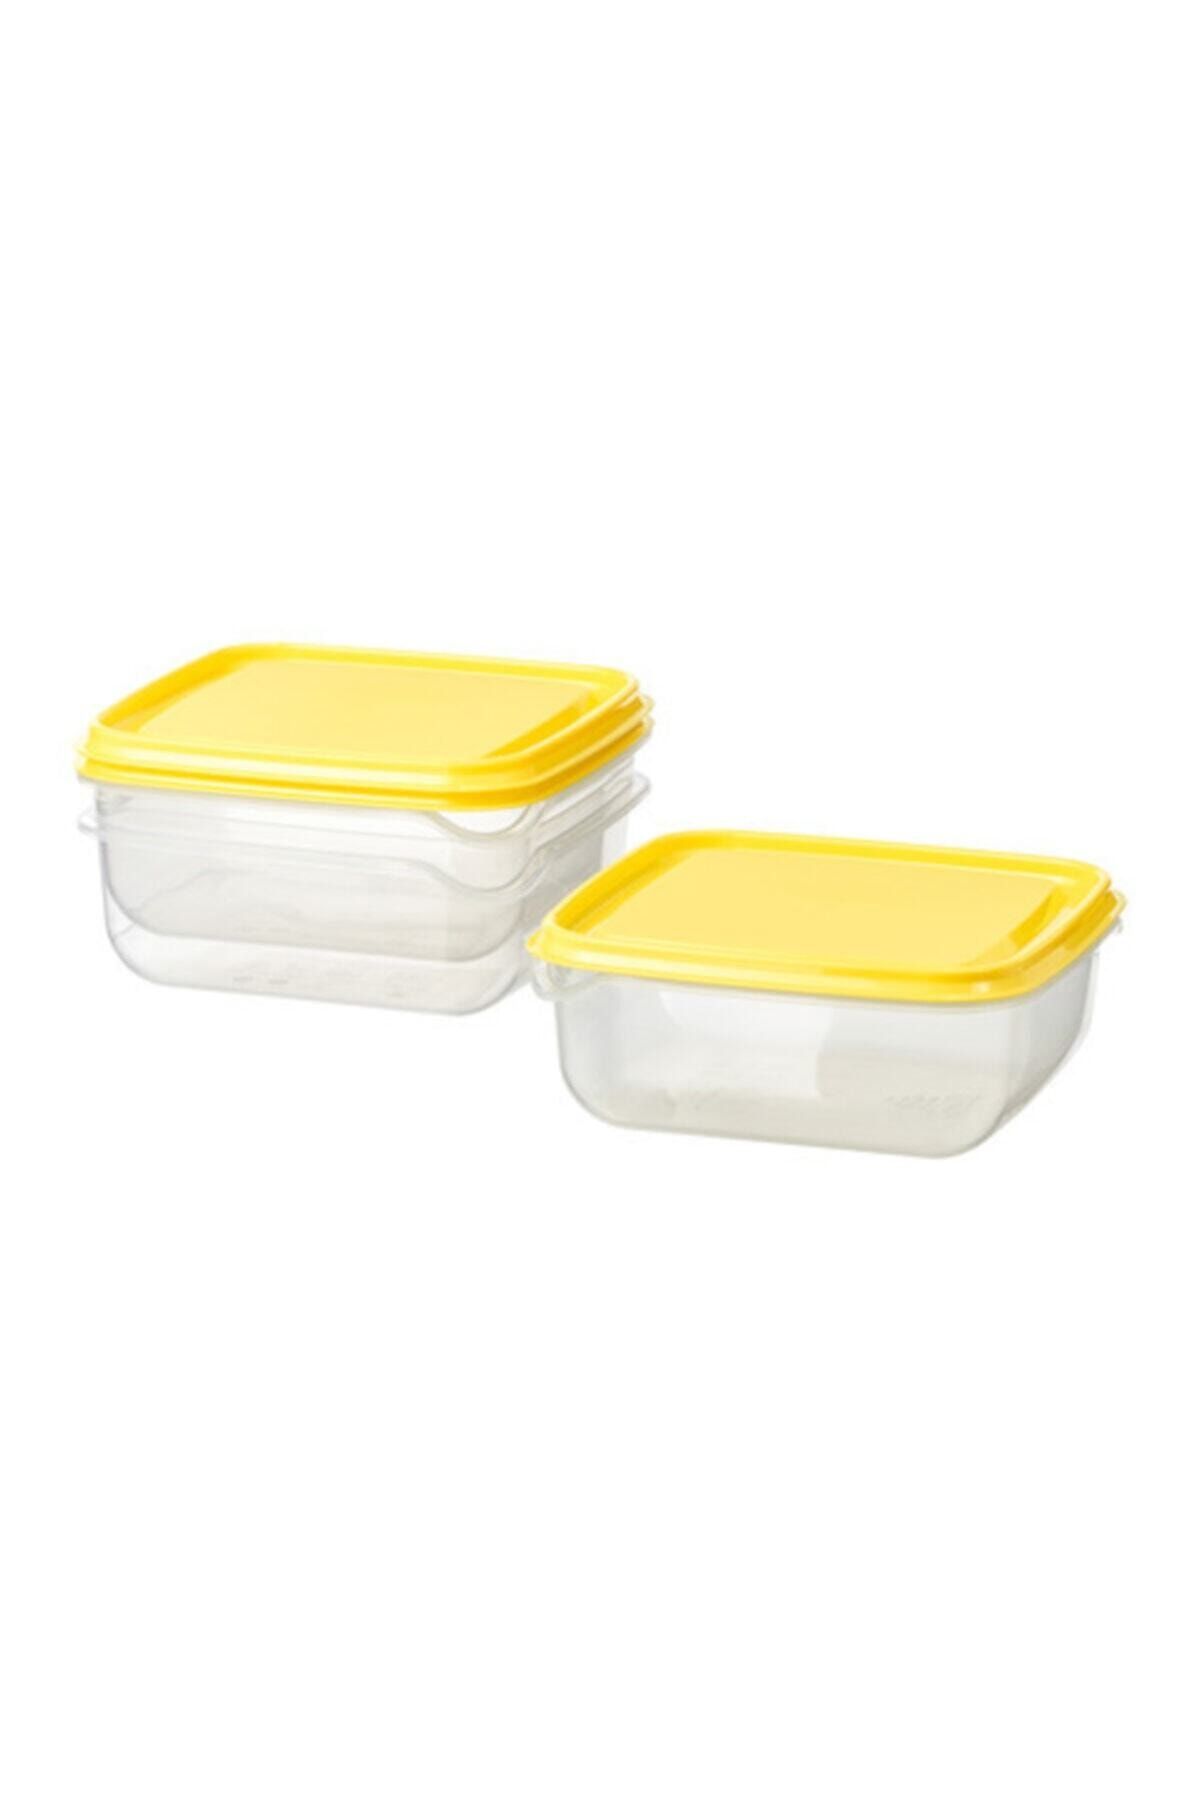 IKEA Pruta Plastik Saklama Kabı Seti, Sarı, 0,6 Lt, 3 Adet